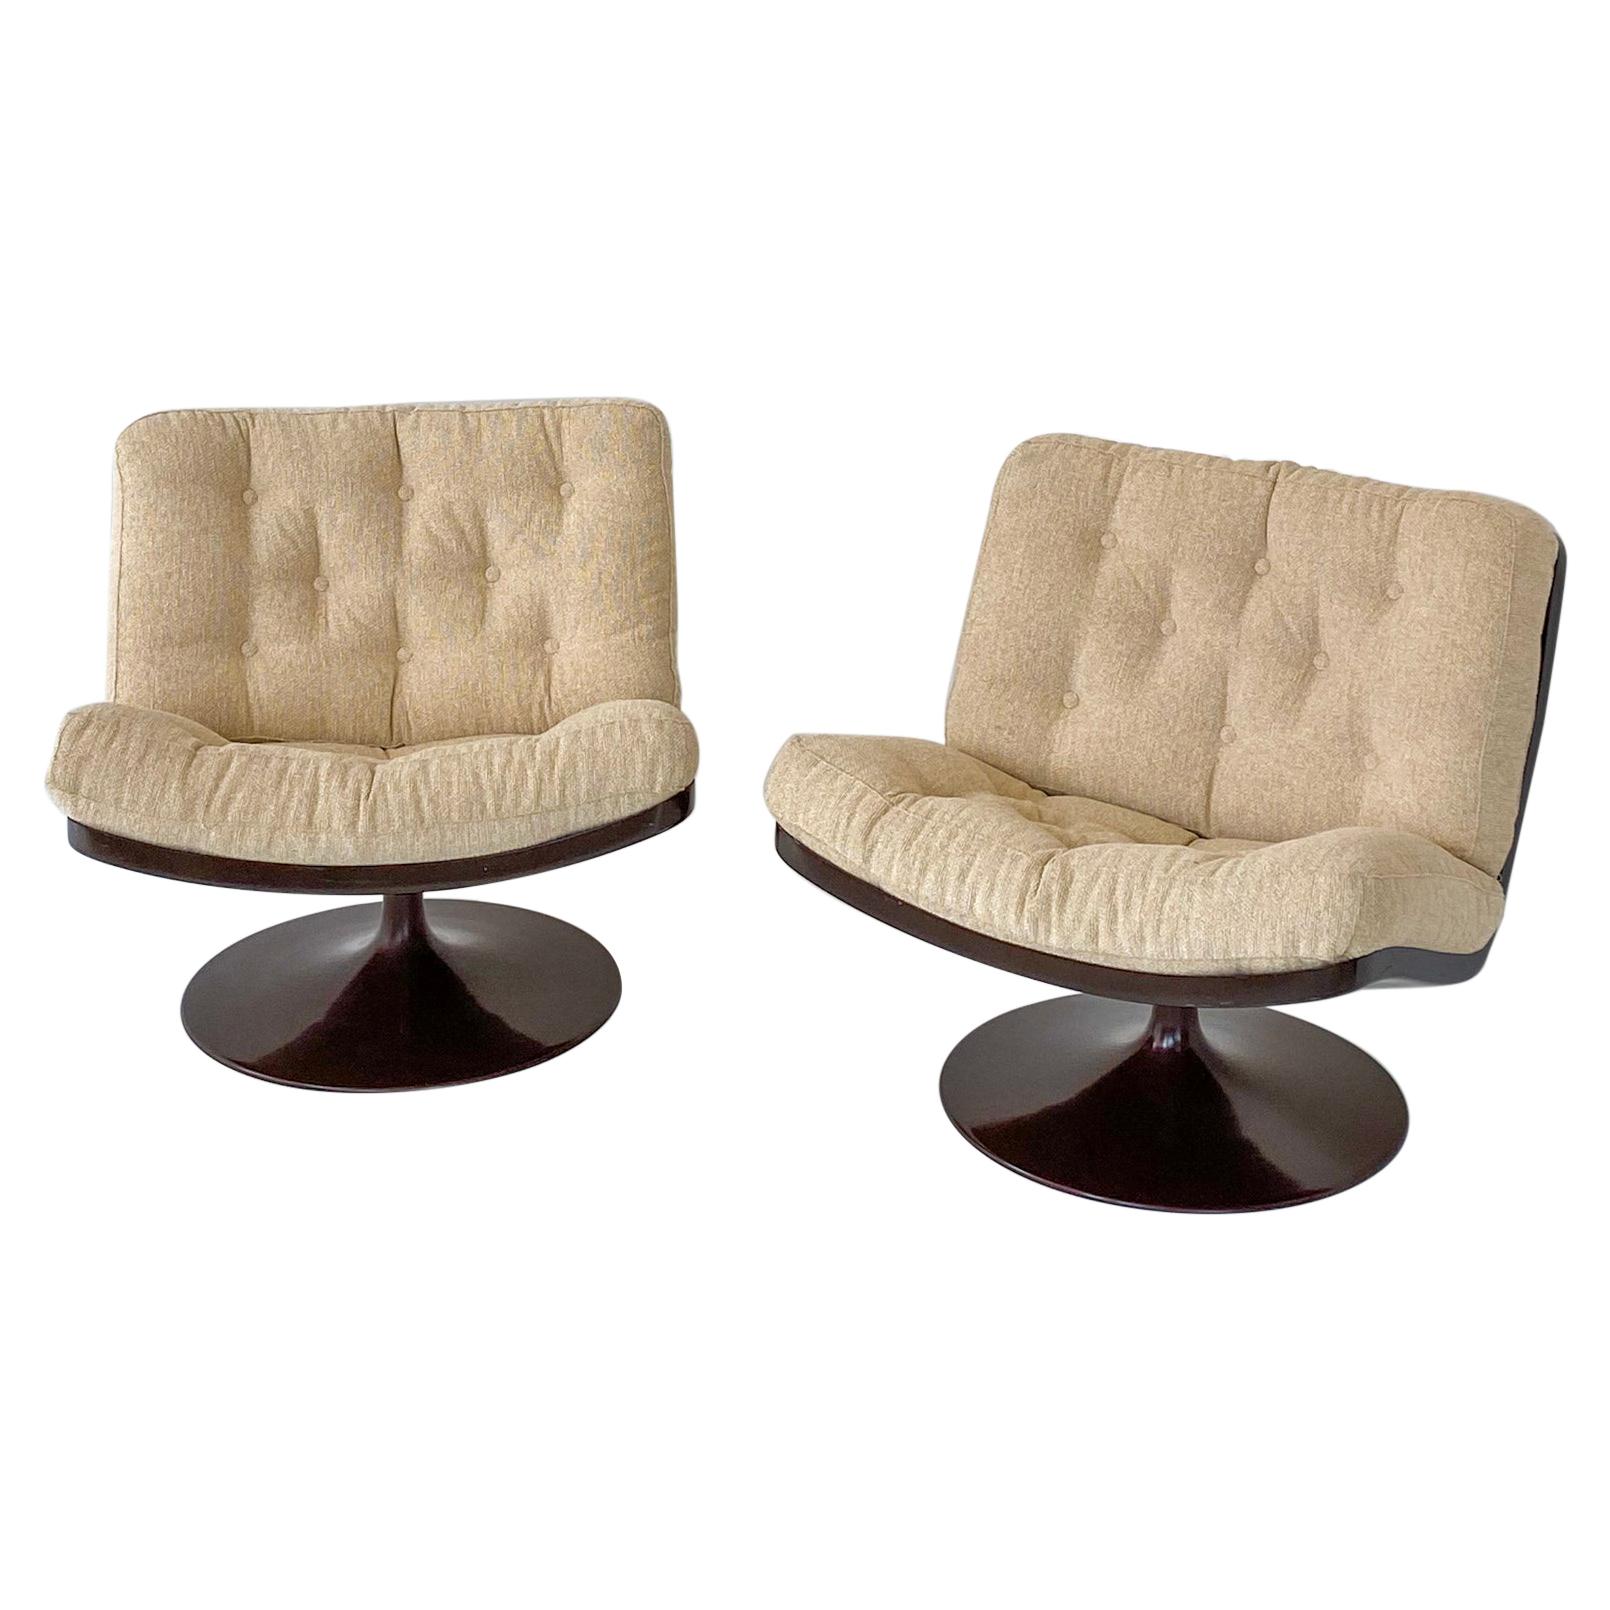 Pair of Mid-Century Modern Creamy-White, Brown Lounge Chairs, Artifort, 1970s